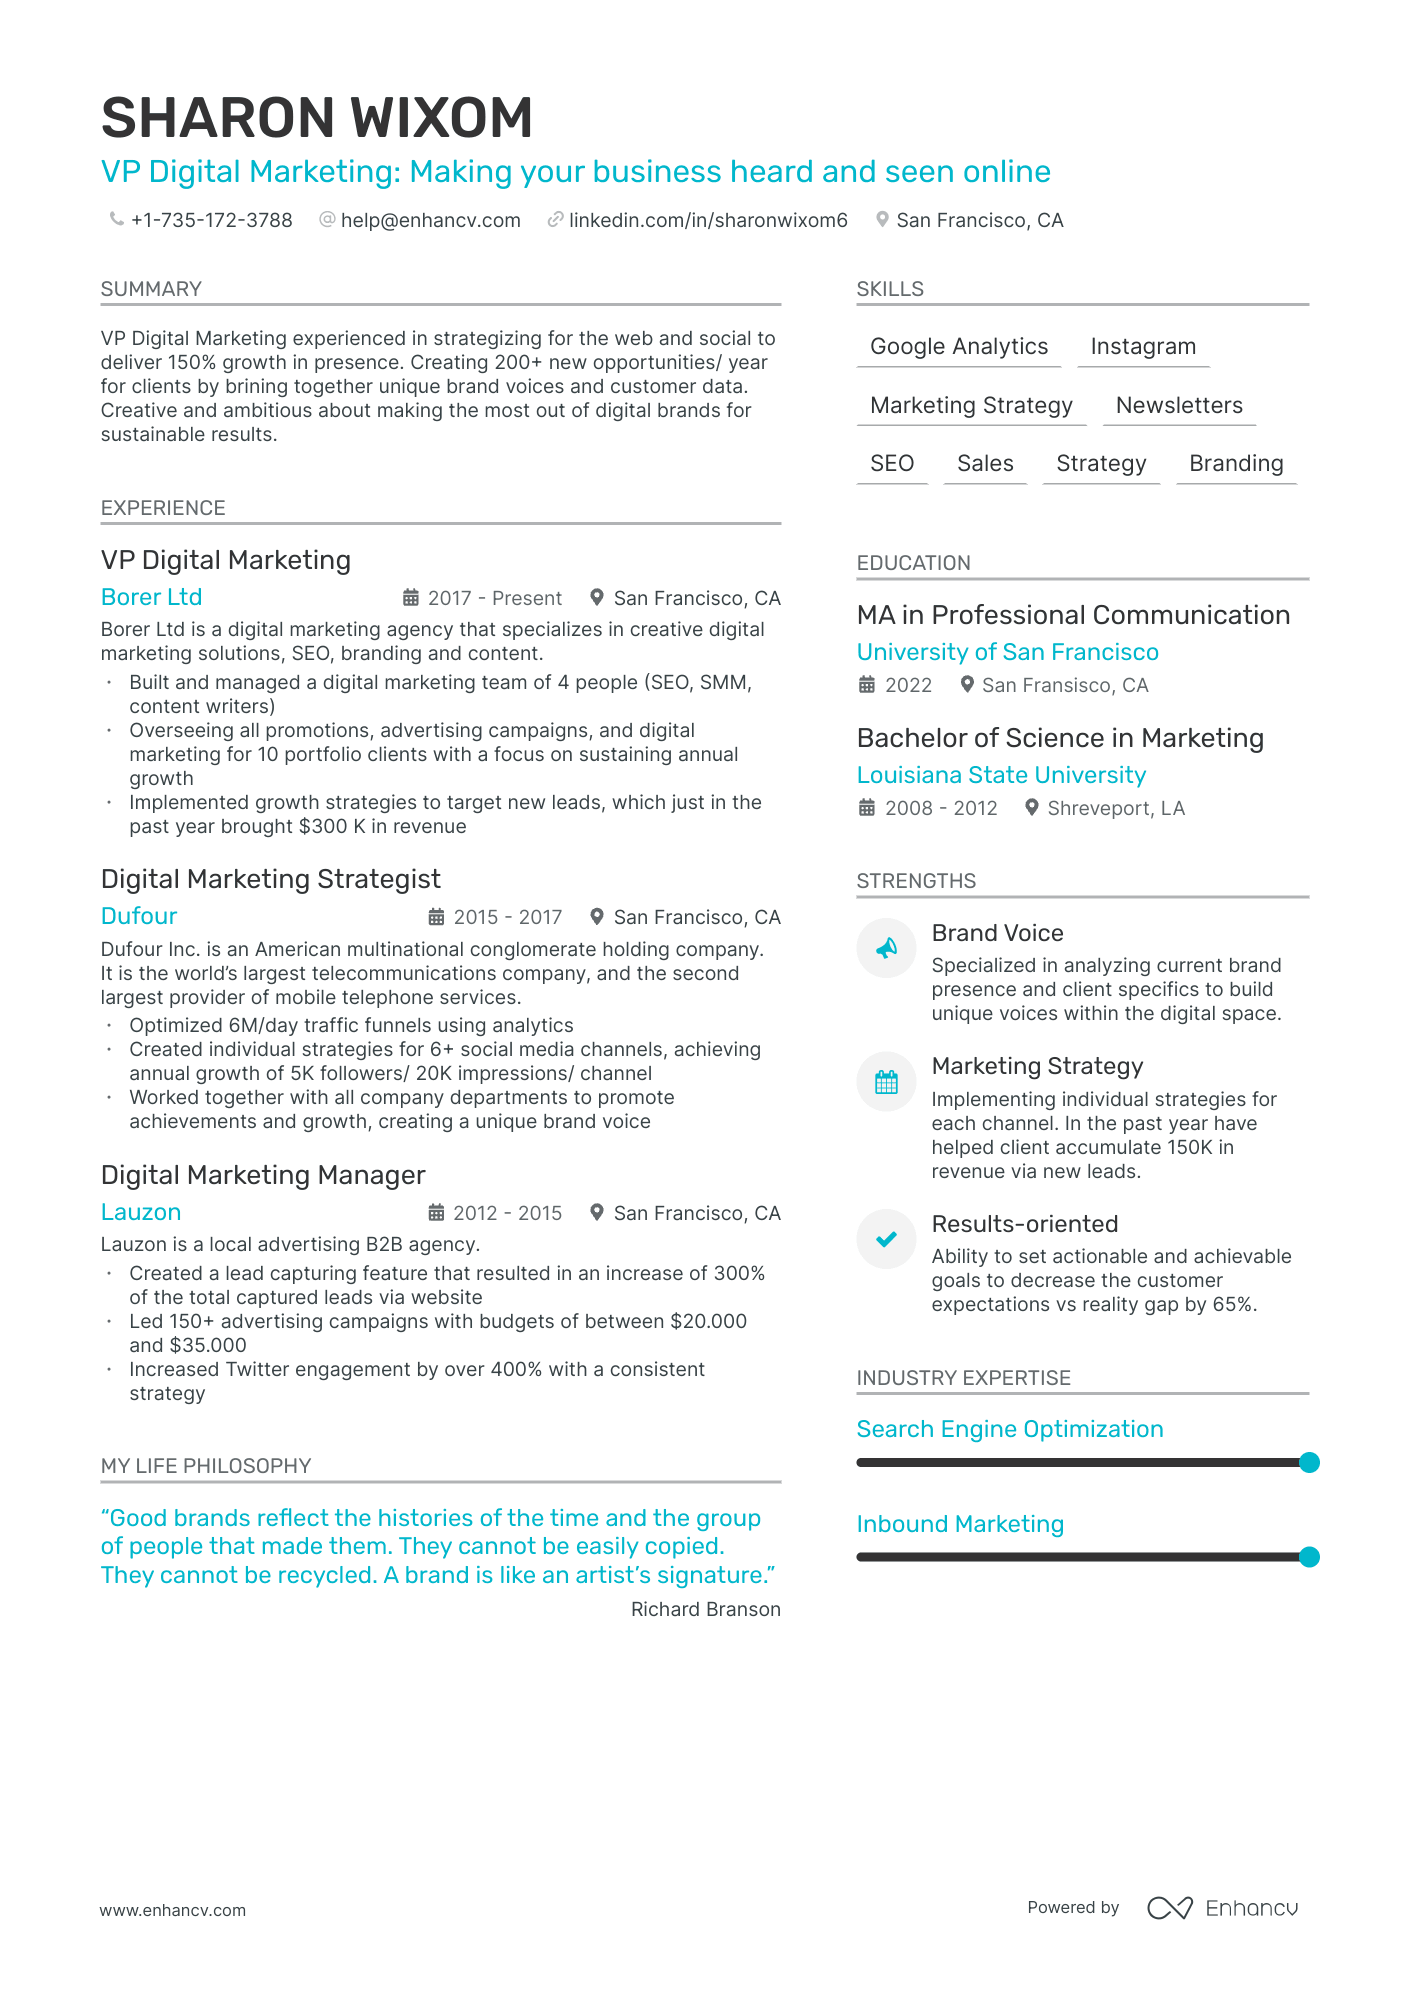 VP Digital Marketing resume example